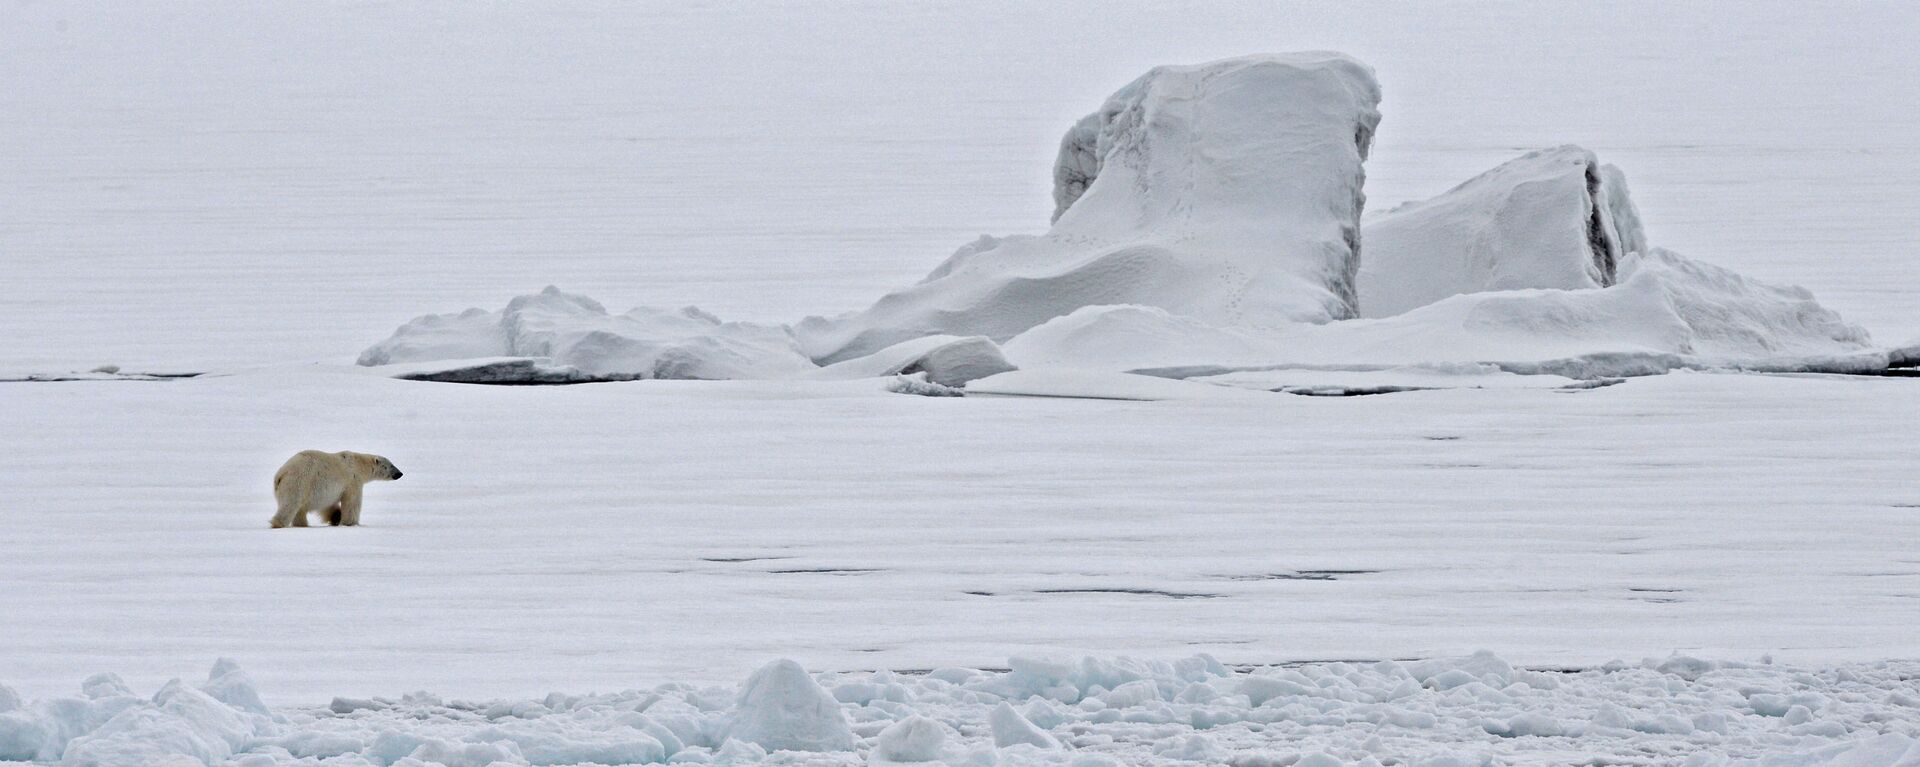 Un oso polar en un témpano de hielo en el Océano Ártico - Sputnik Mundo, 1920, 09.06.2022